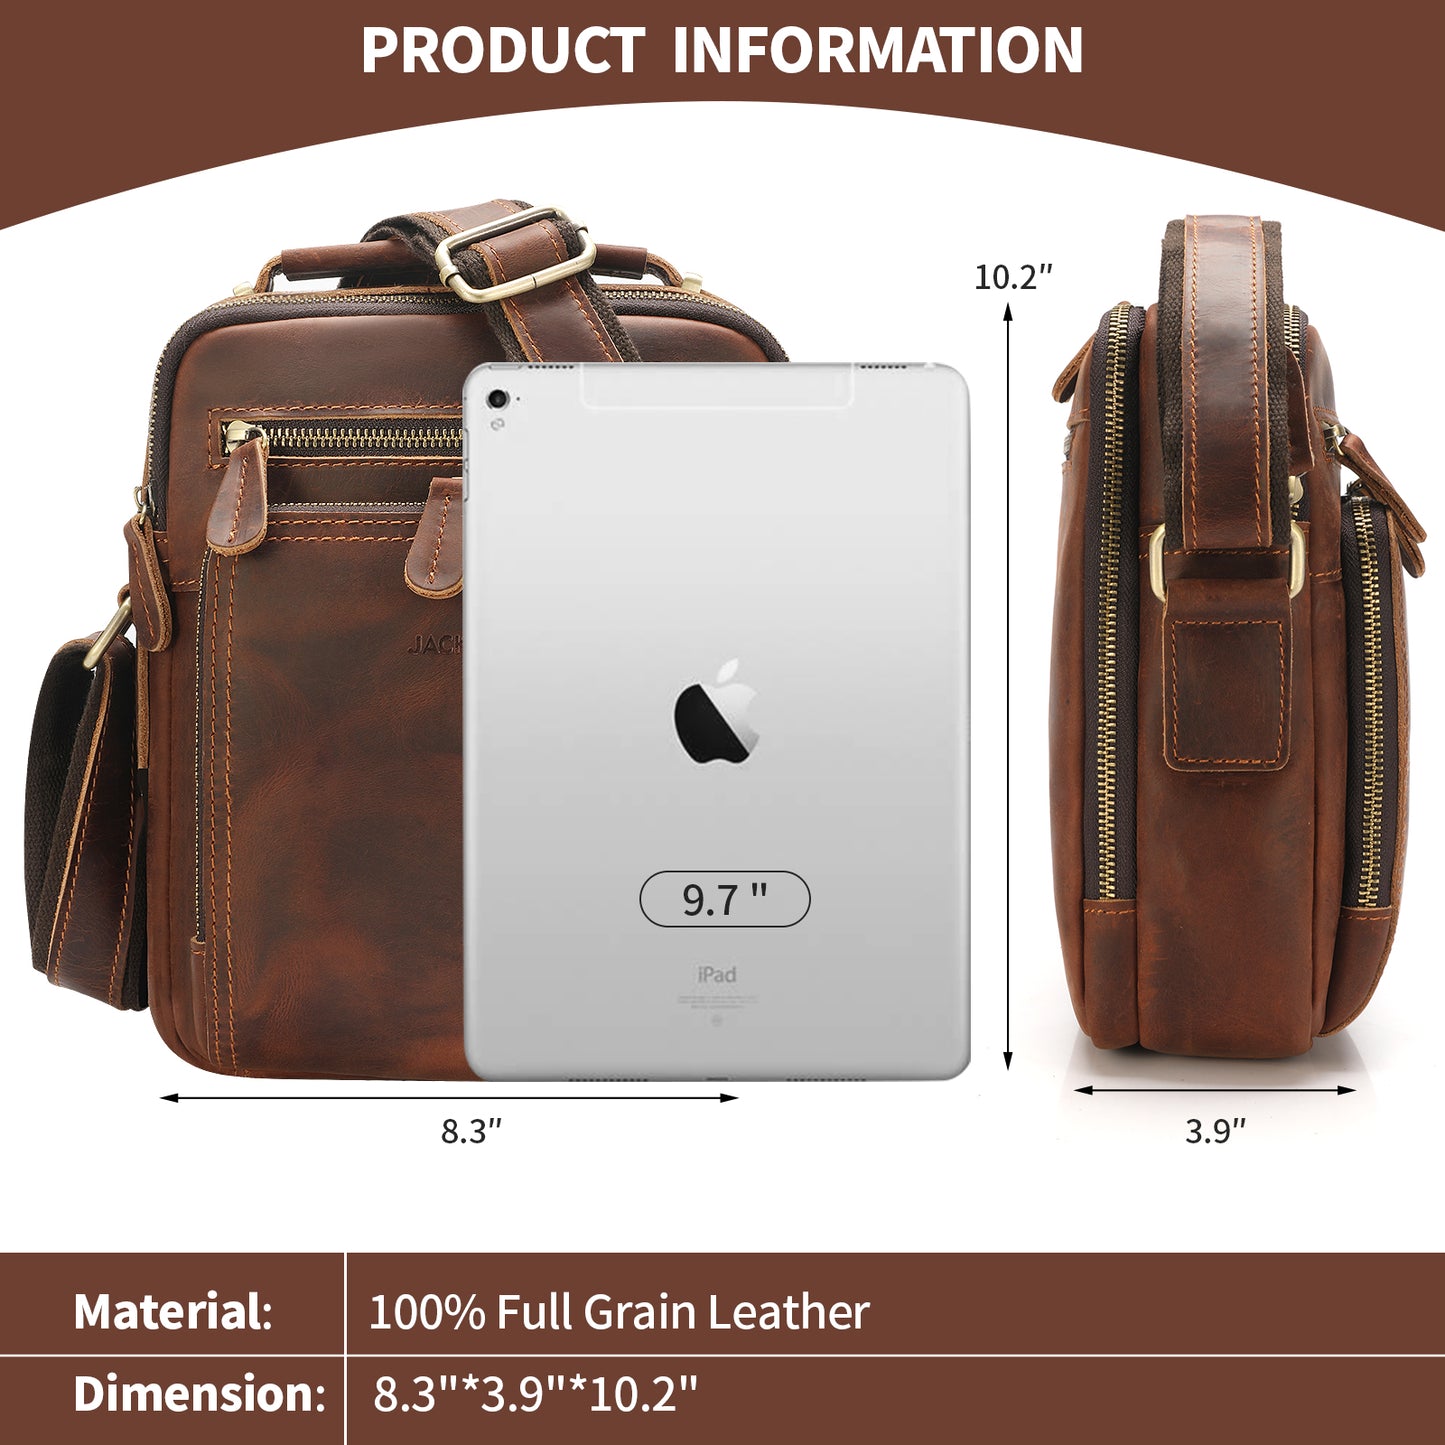 Jack&Chris Leather Messenger Bag for Men, Man Purse Crossbody Bags for Work Business